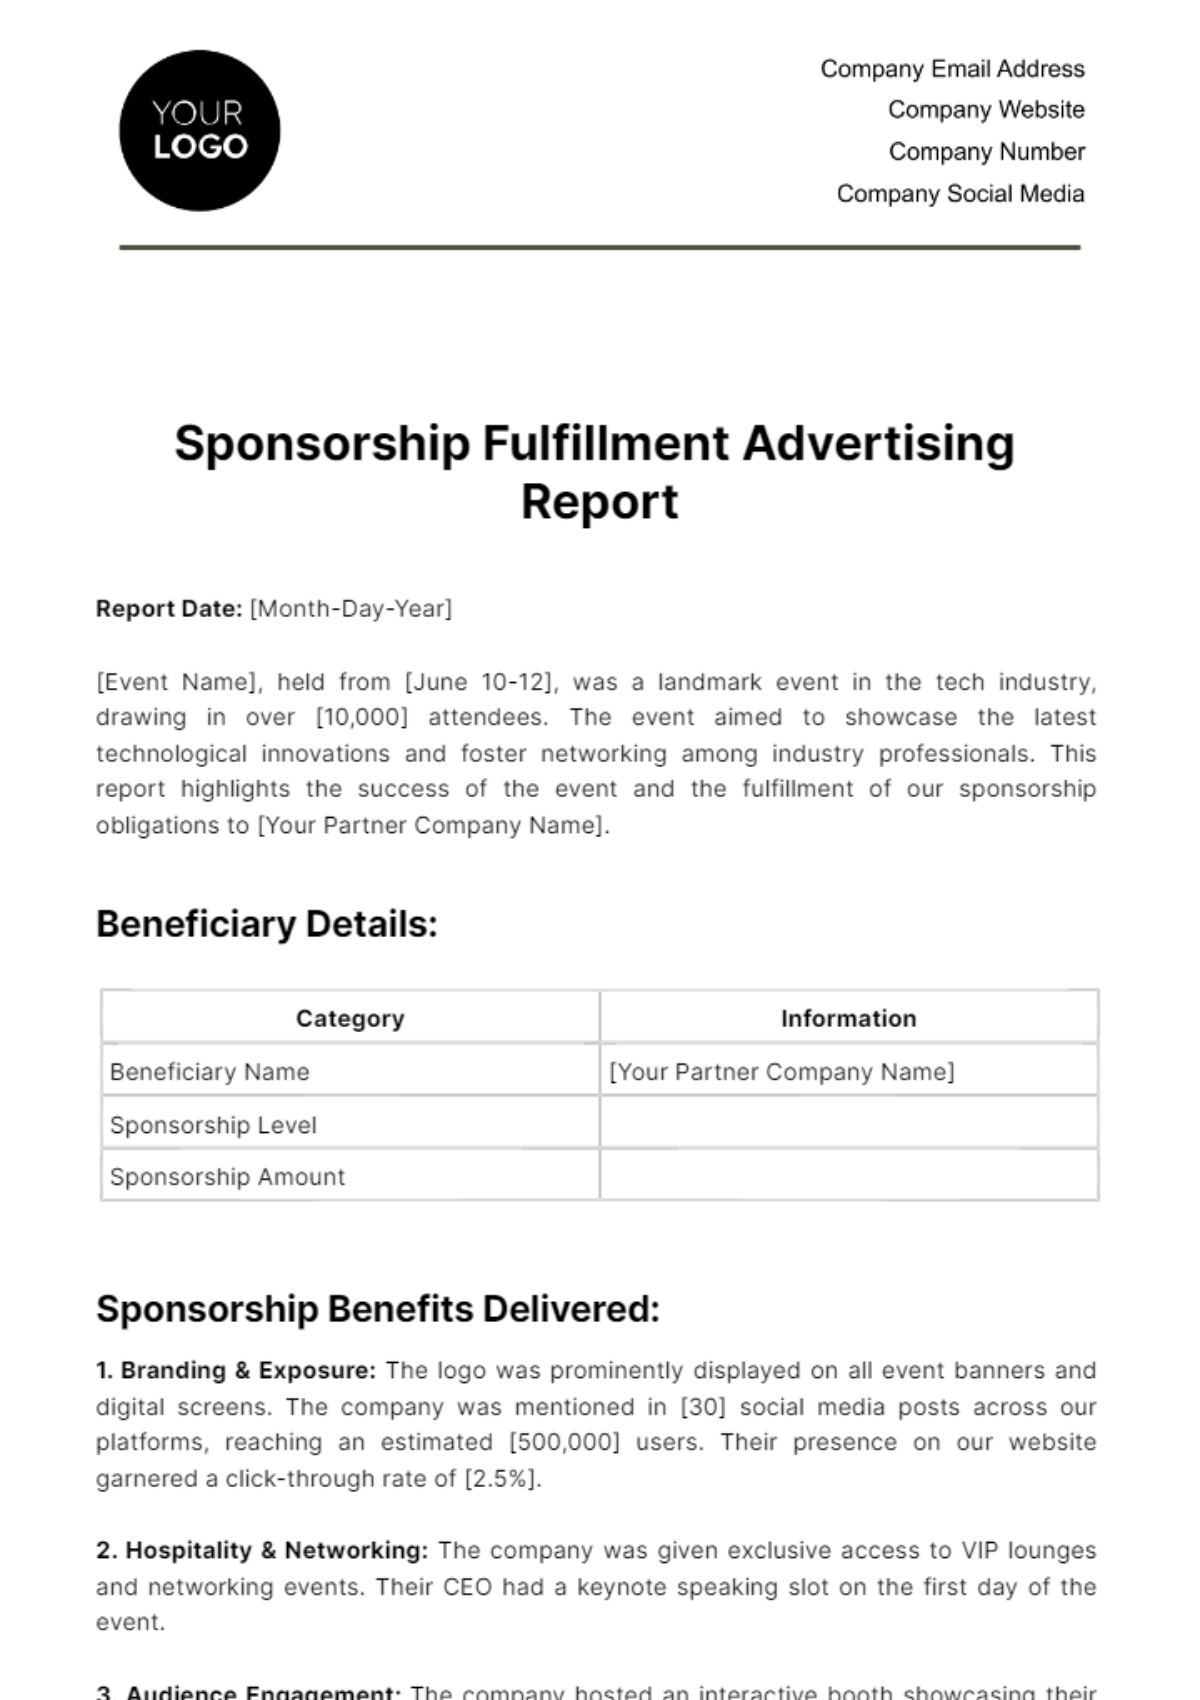 Sponsorship Fulfillment Advertising Report Template